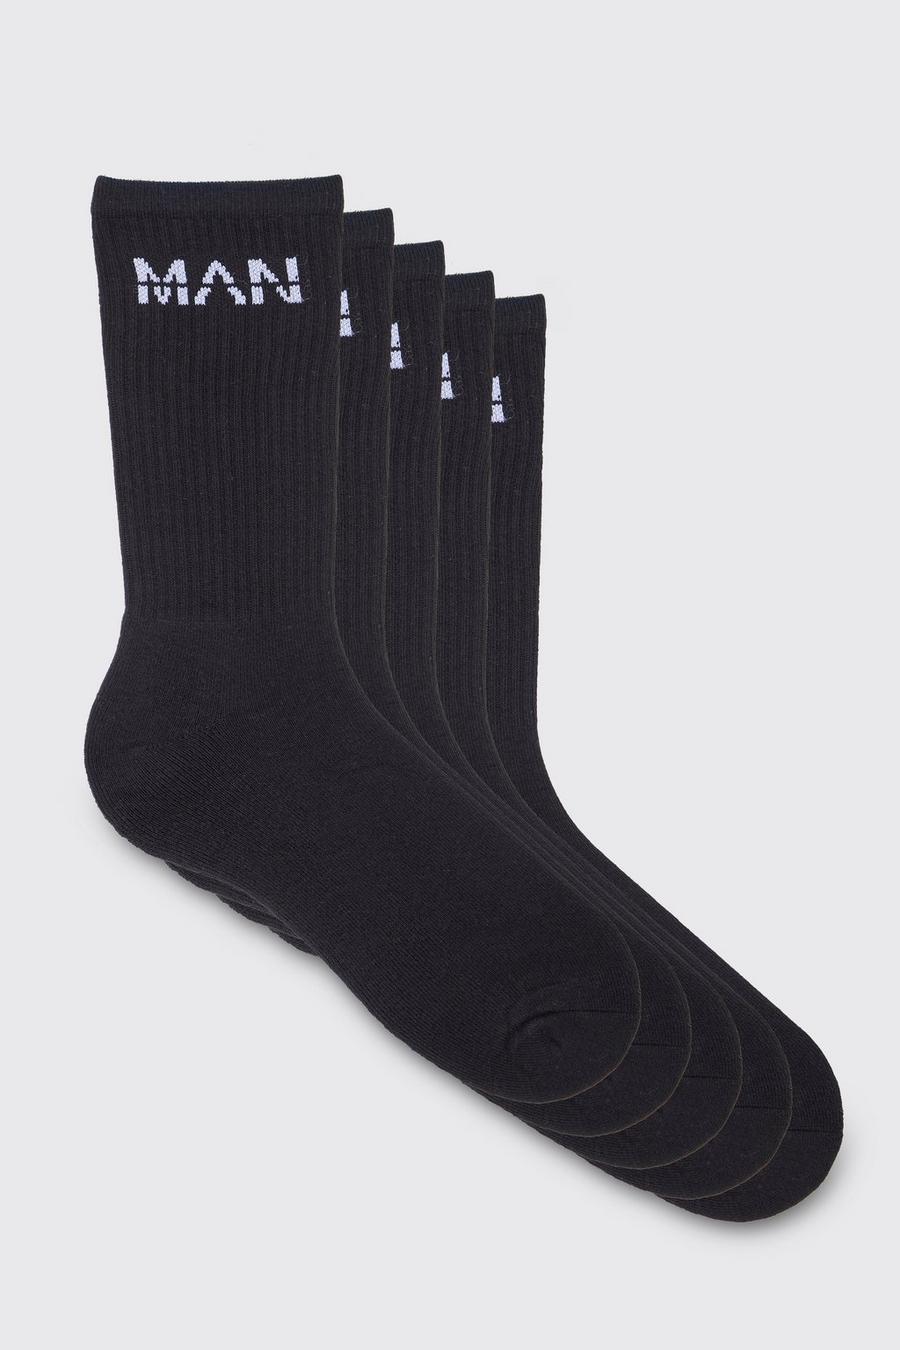 Pack de 5 pares de calcetines MAN deportivos, Black image number 1